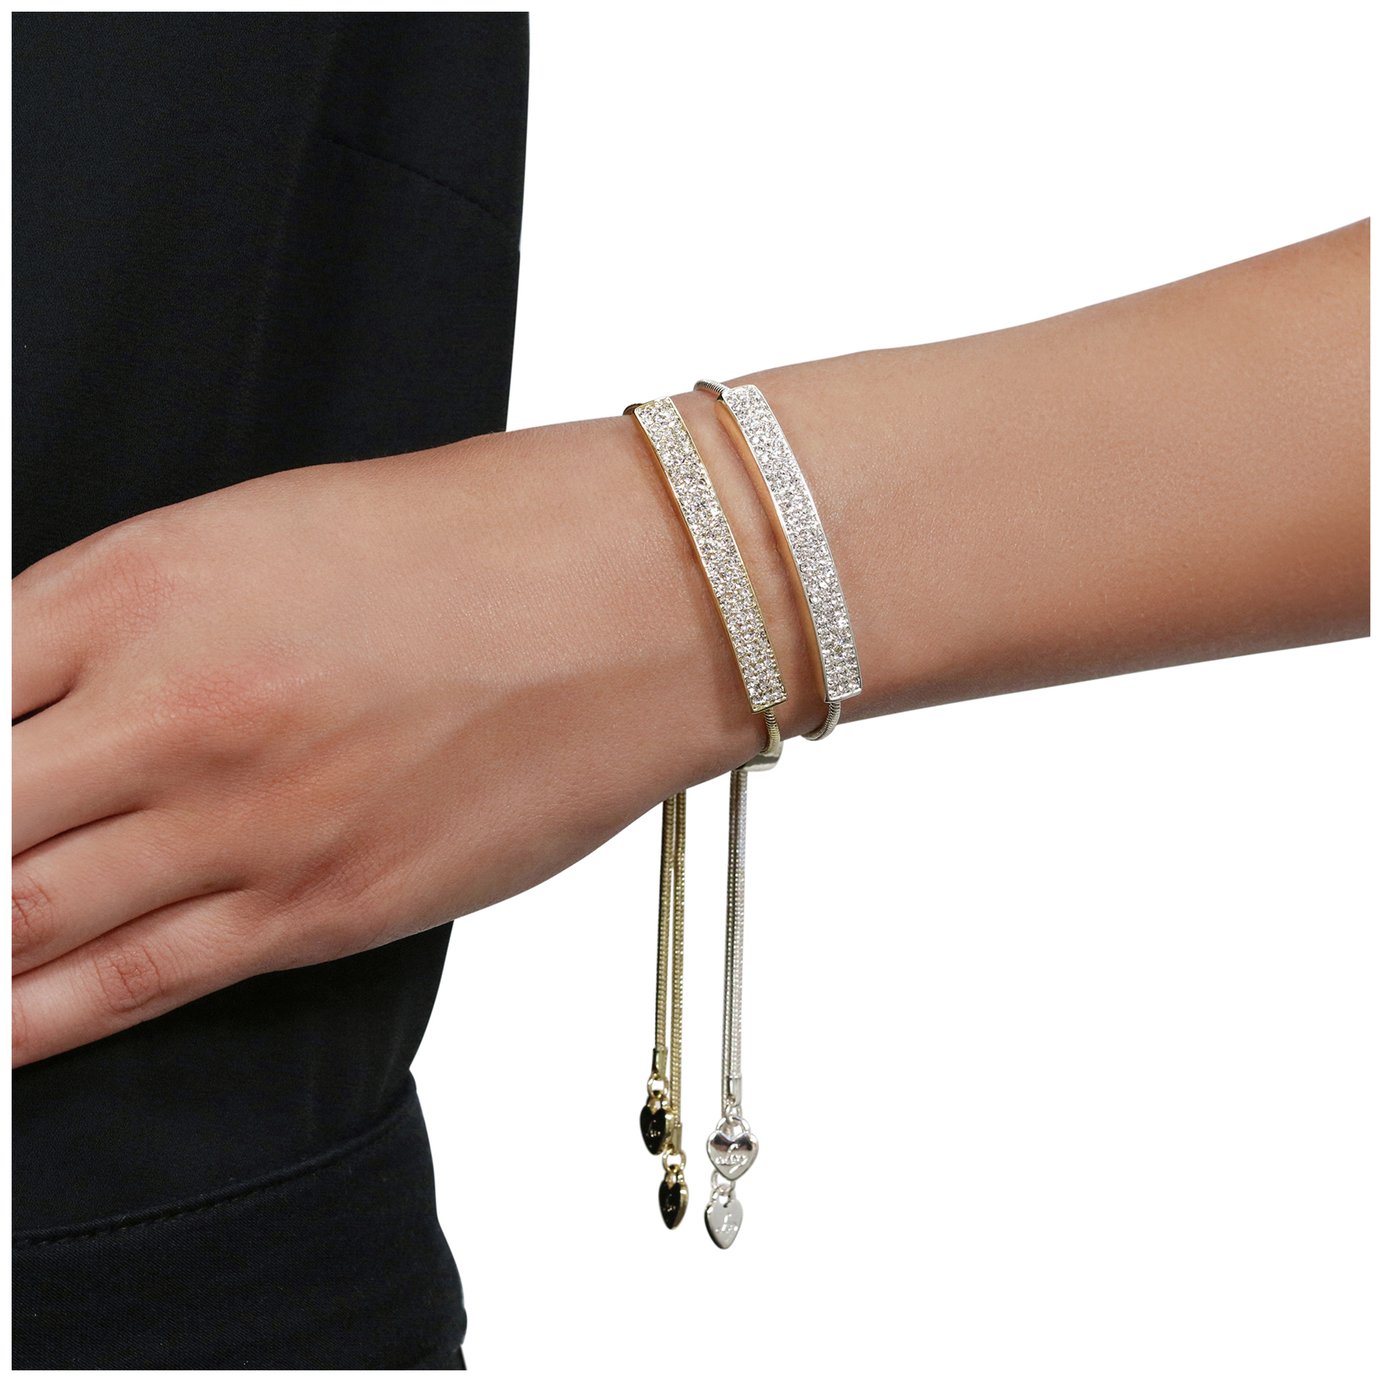 crystal friendship bracelet